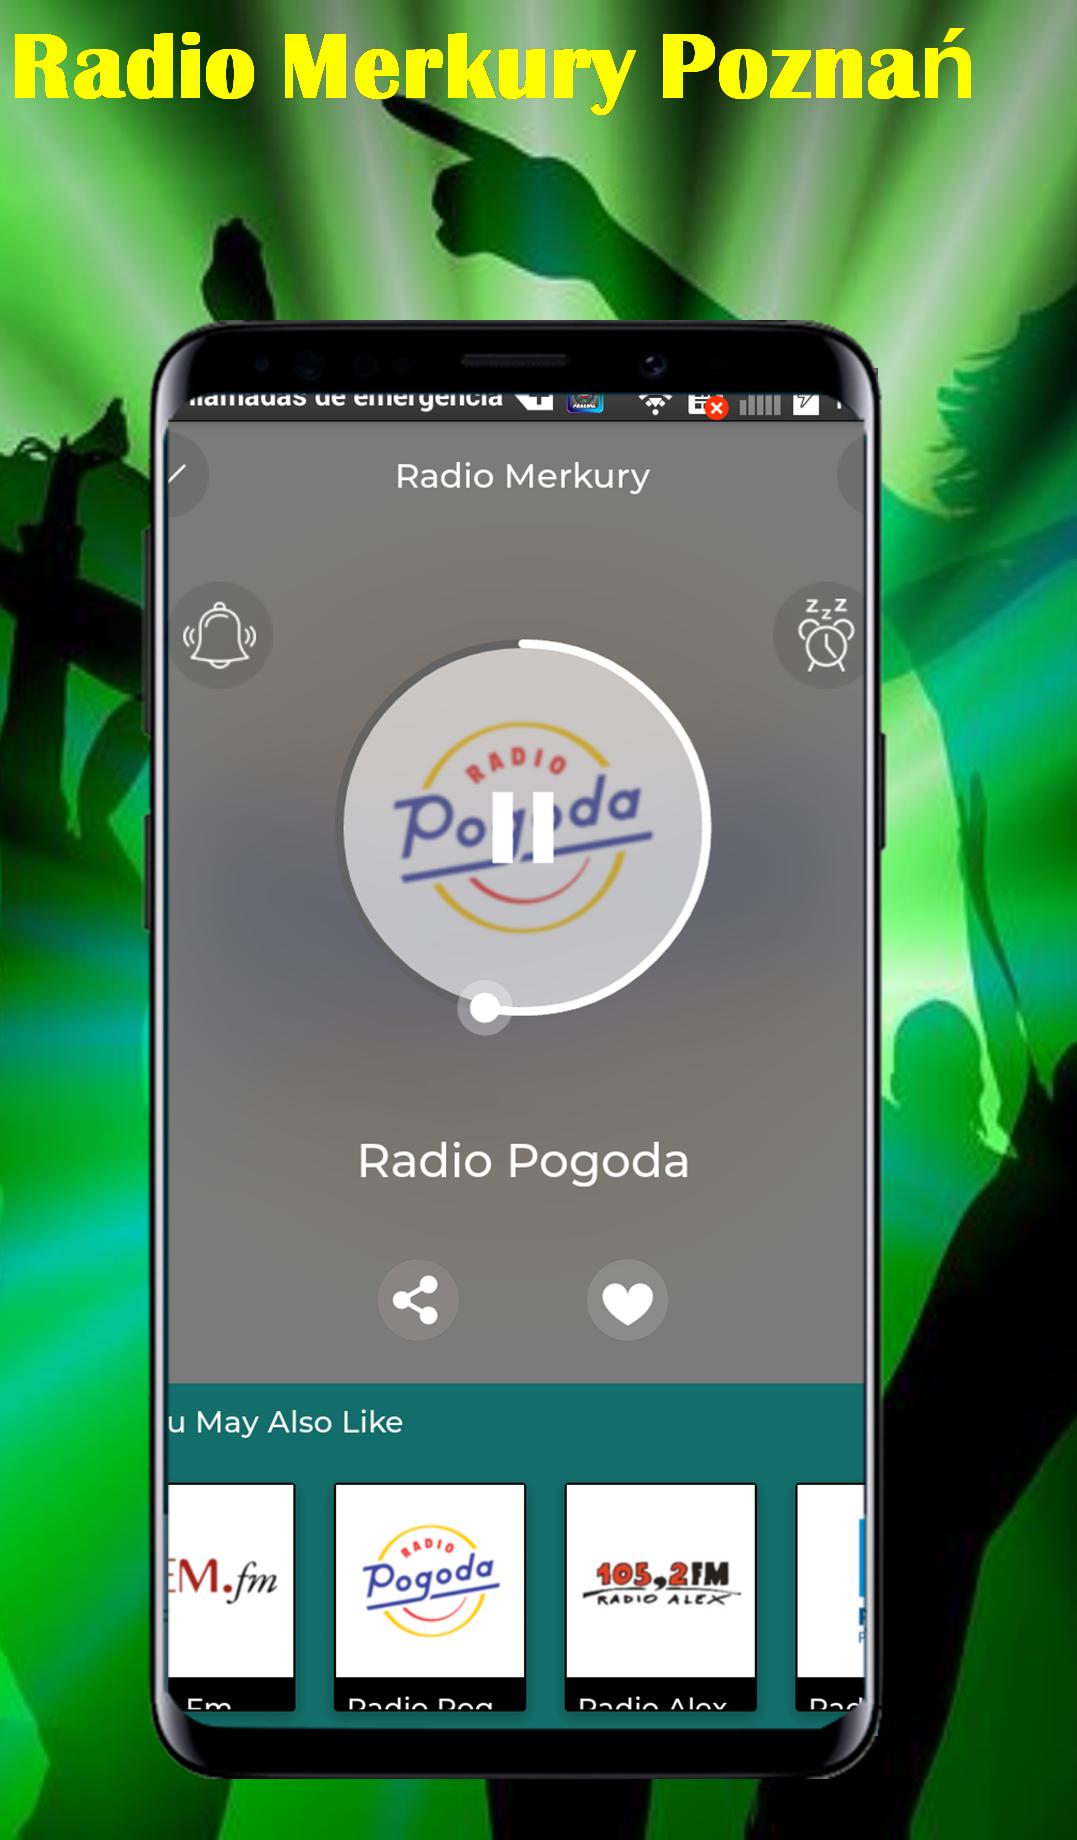 Radio Merkury Poznań for Android - APK Download